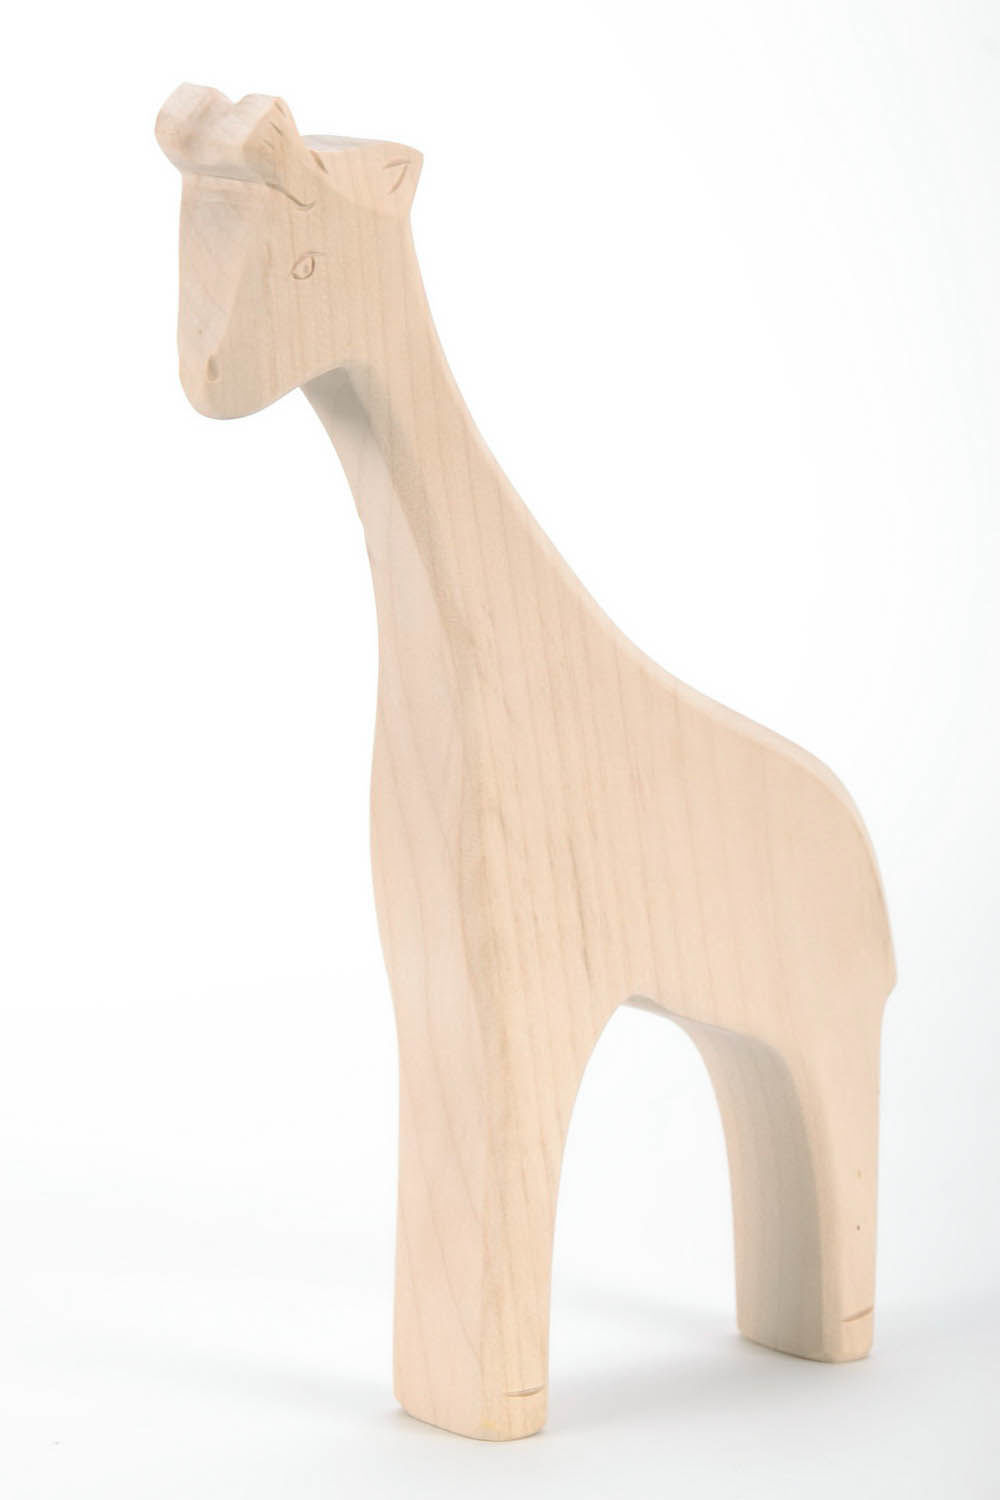 Brinquedo de madeira Girafa foto 1